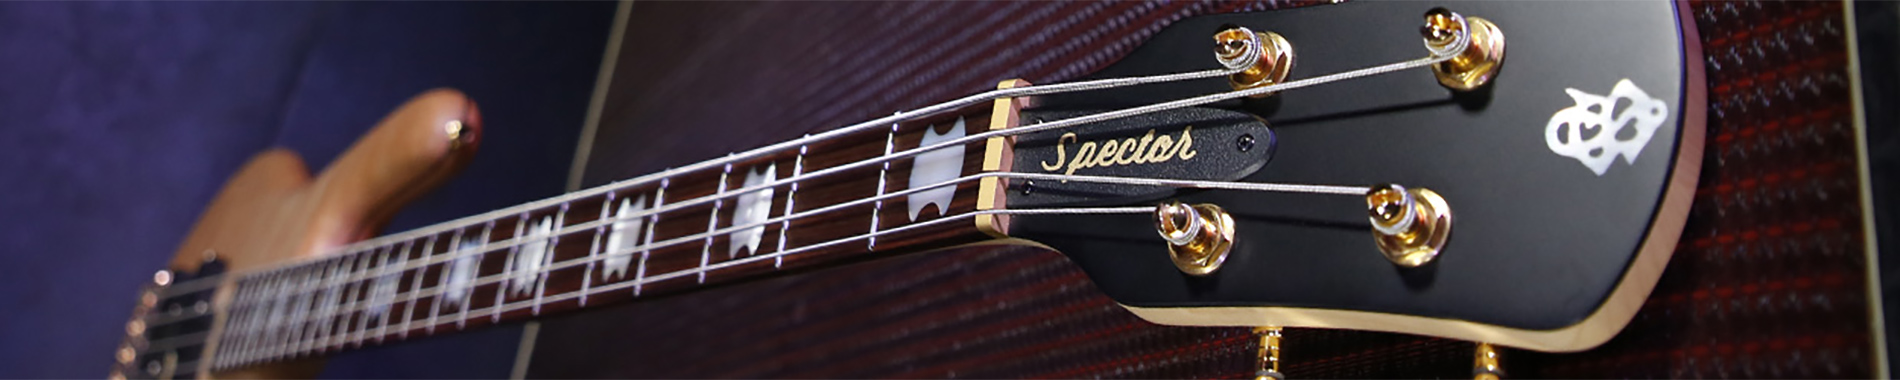 headstock of Spector bass